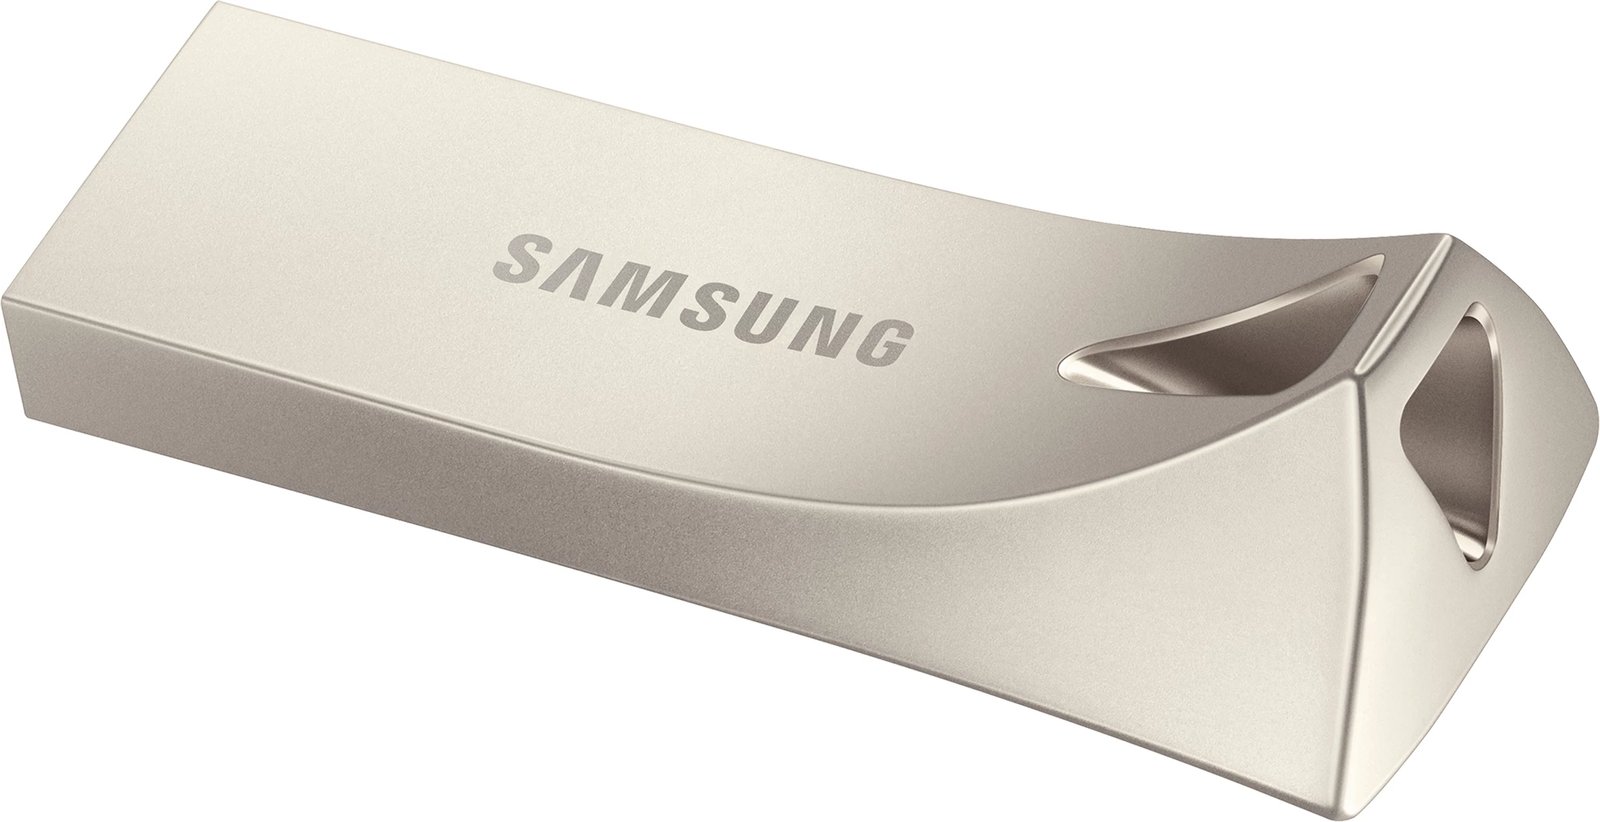 USB Samsung MUF-128BE, 128GB, argjend